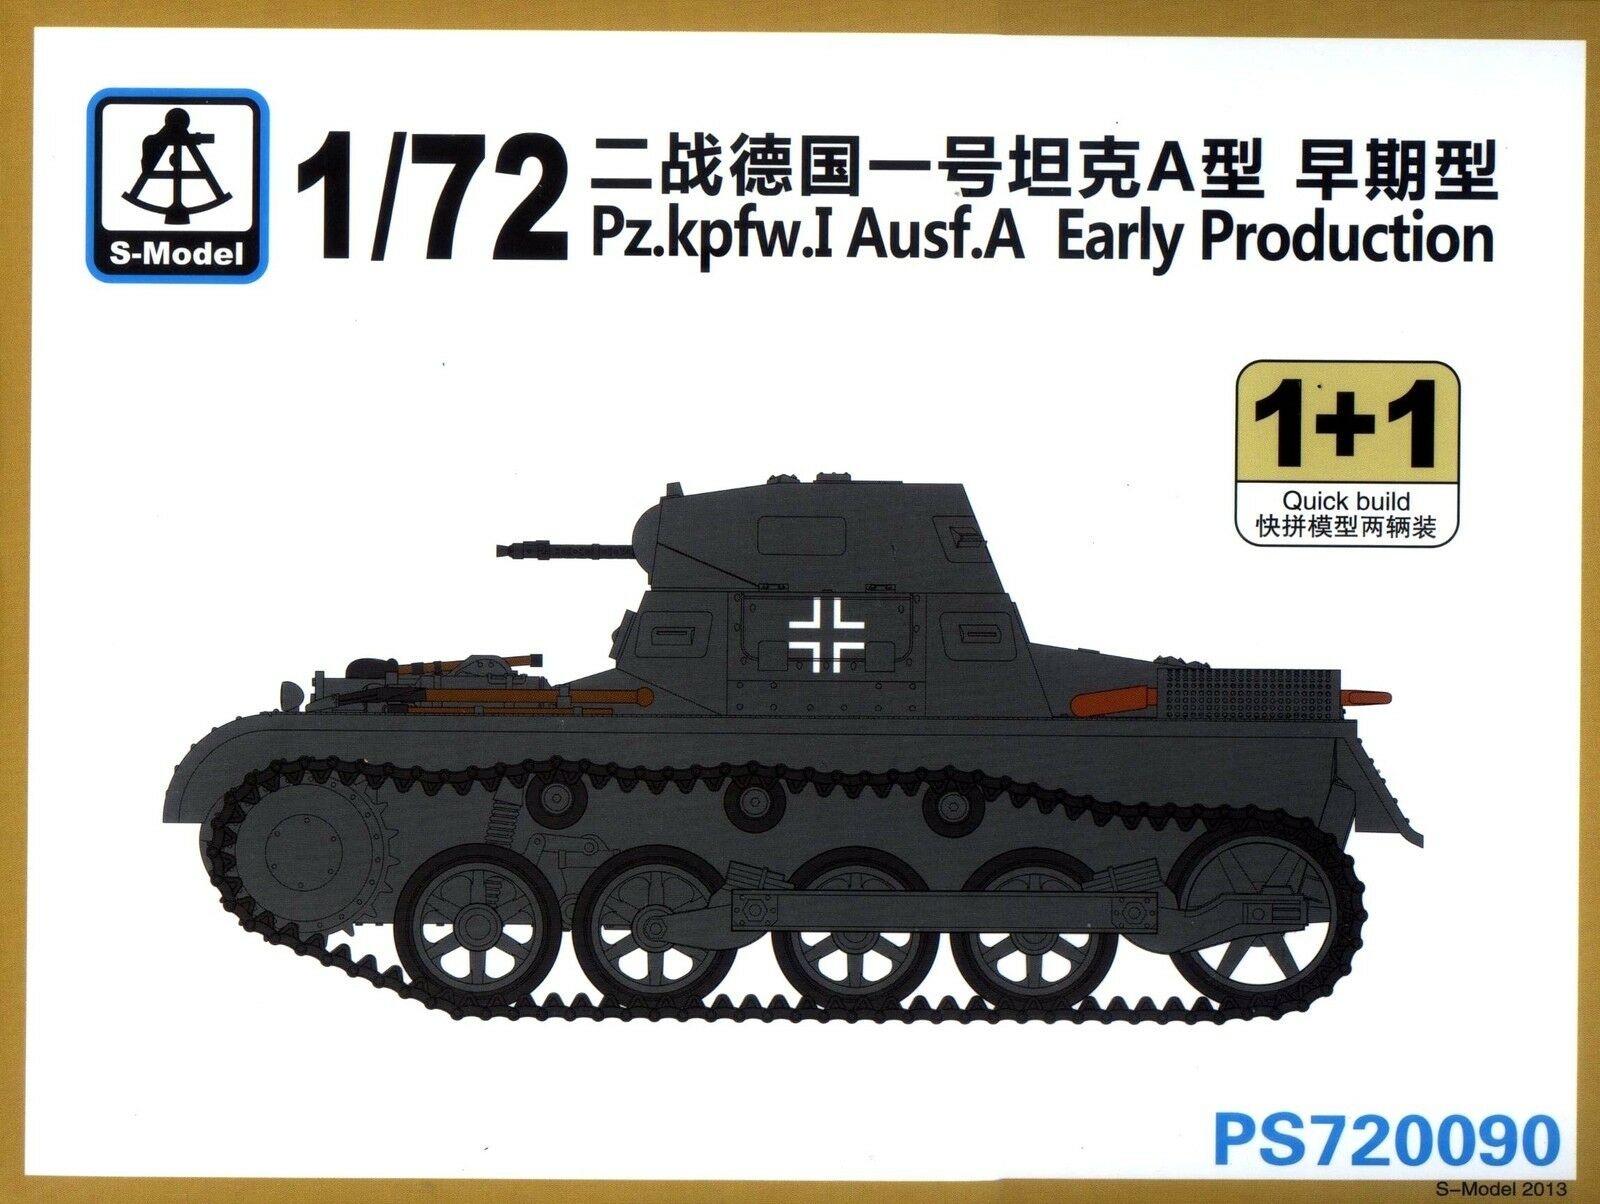 PS720090  техника и вооружение  Pz.kpfw.I Ausf.A Early Production 1+1 Quickbuild  (1:72)